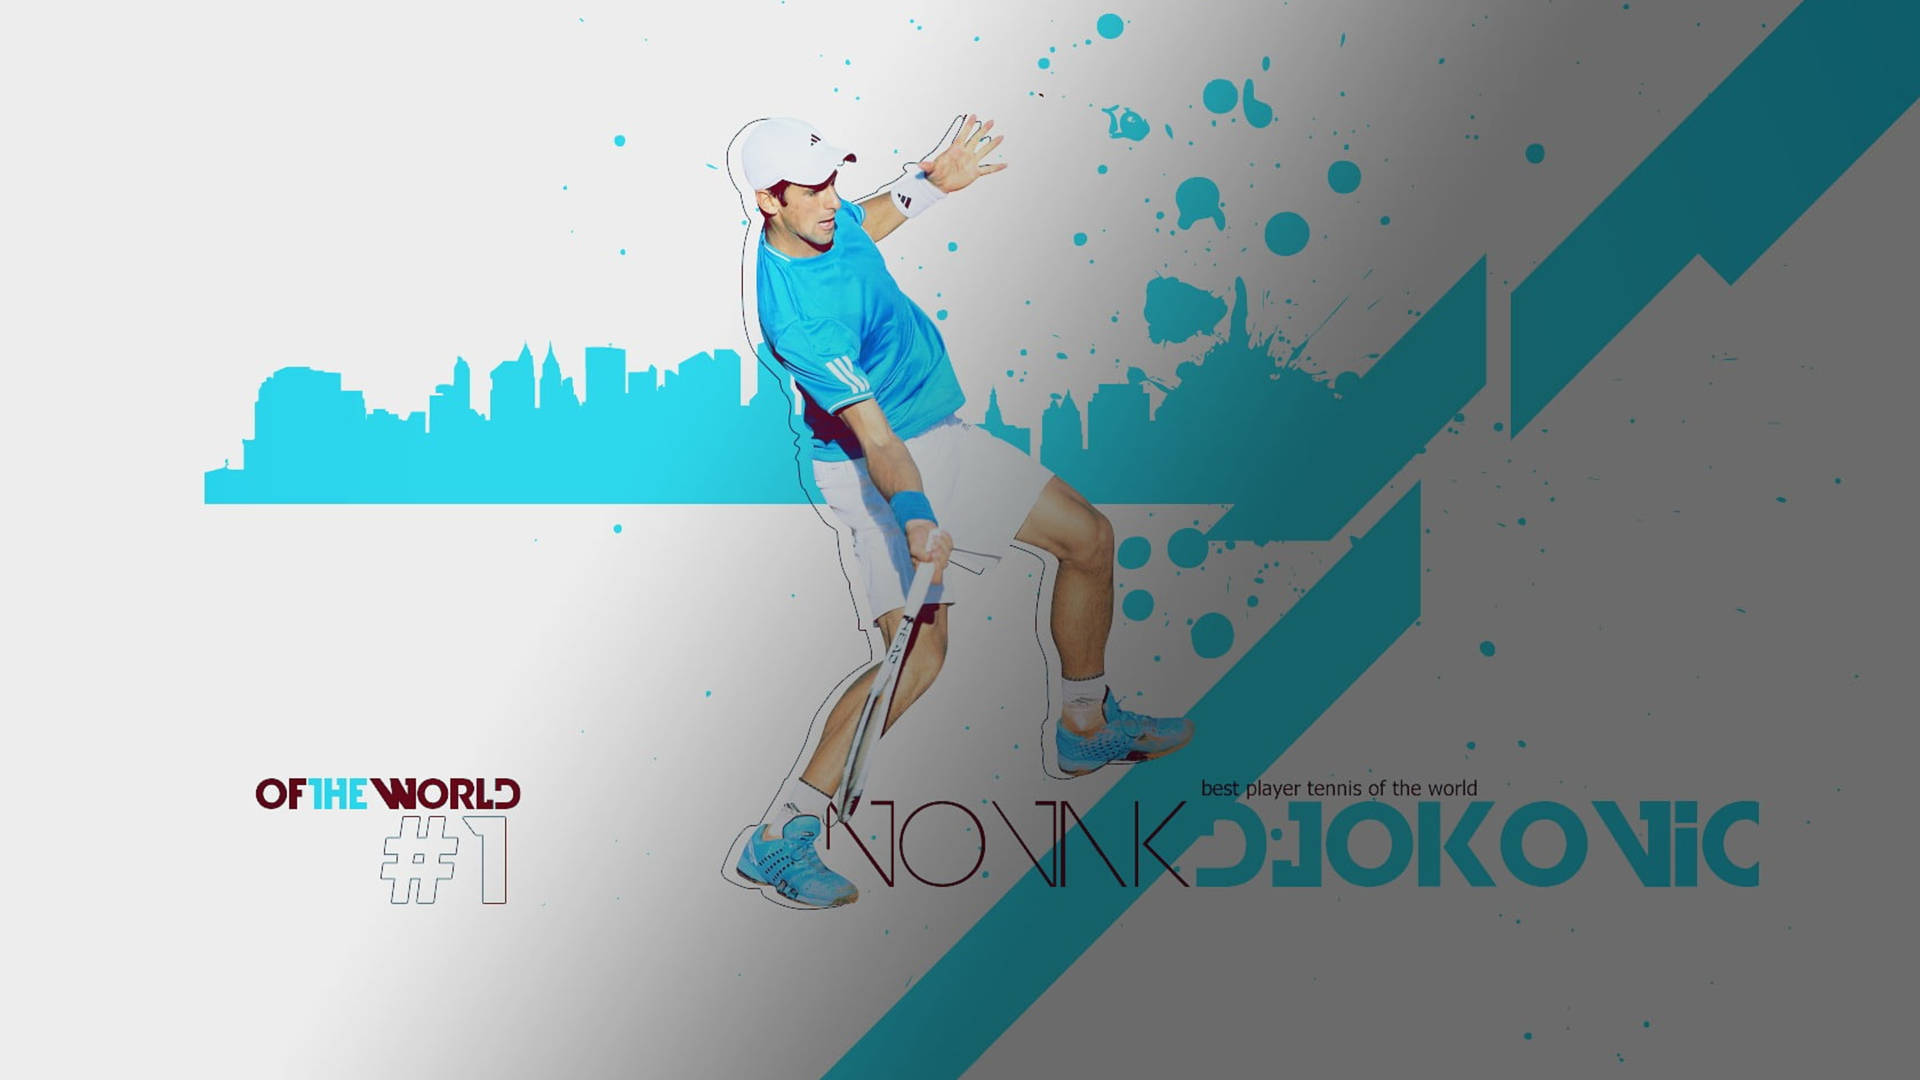 Novak Djokovic Fanart Poster Background